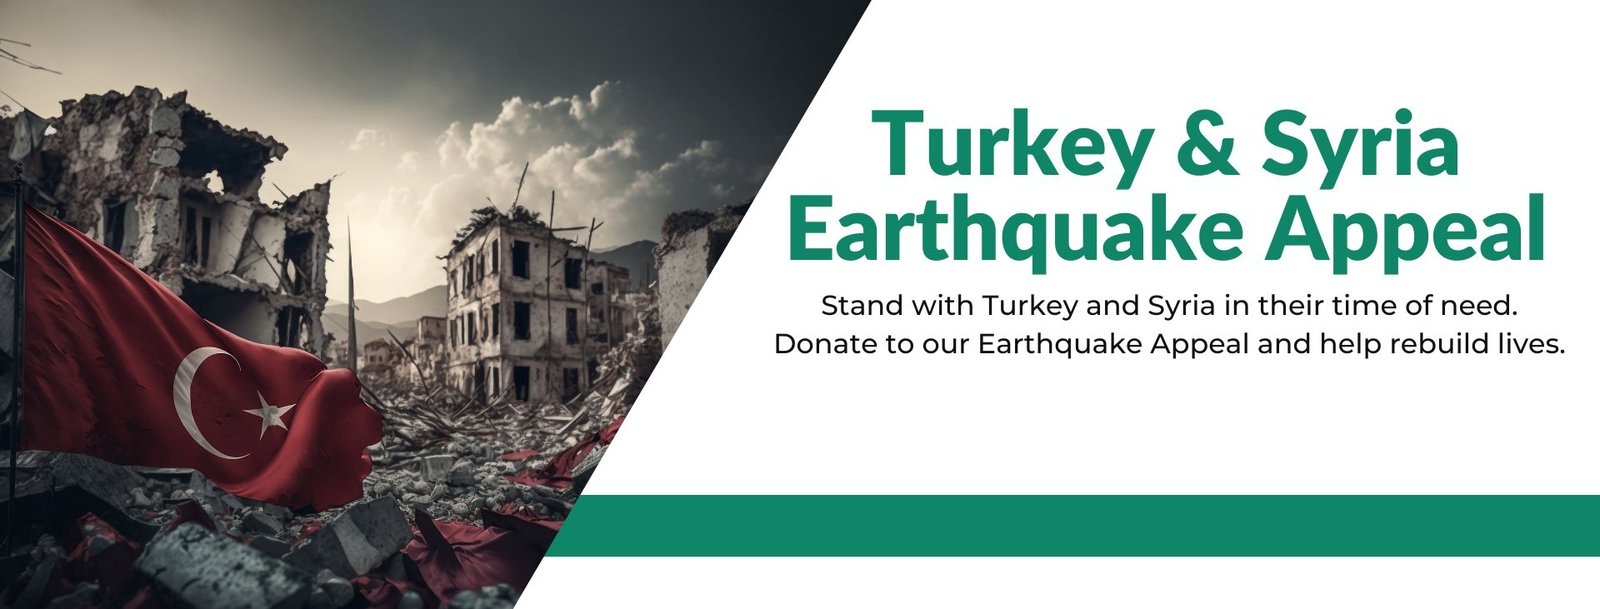 Turkey & Syria Earthquake Appeal